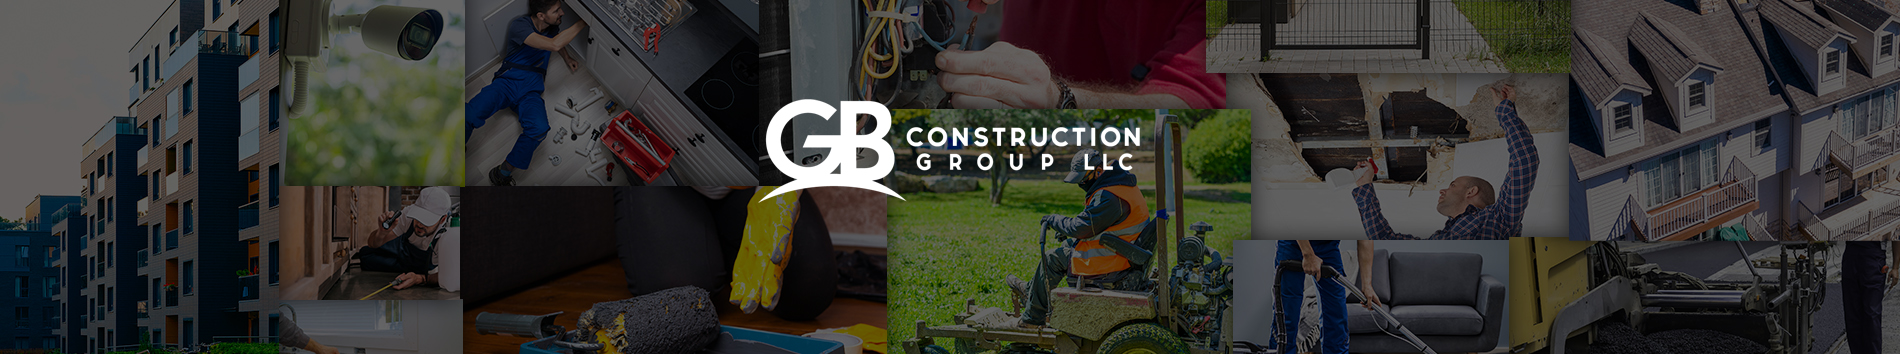 GB Construction Group LLC